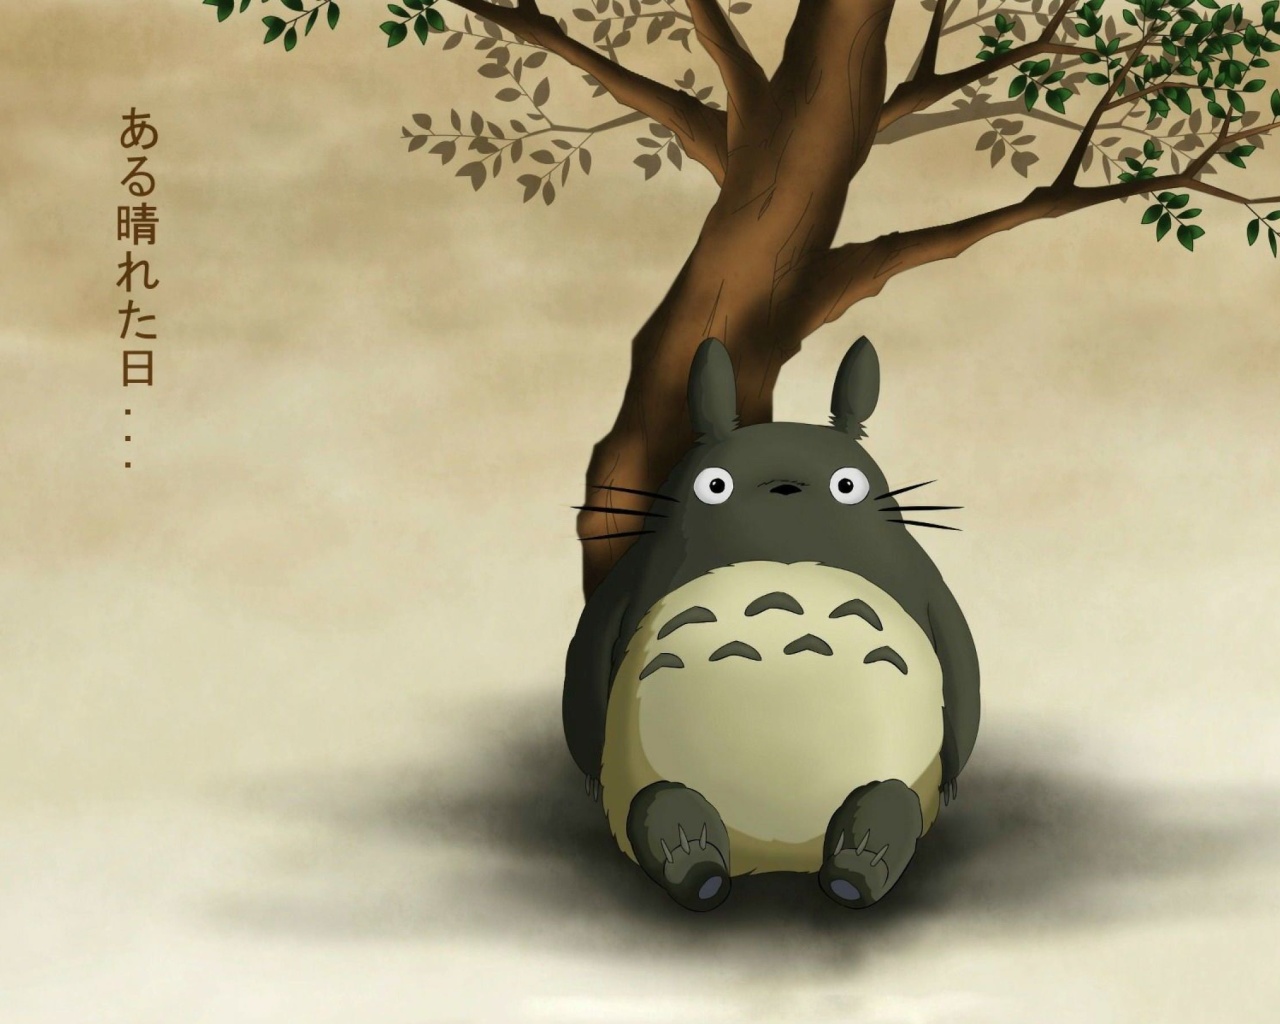 Das My Neighbor Totoro Anime Film Wallpaper 1280x1024